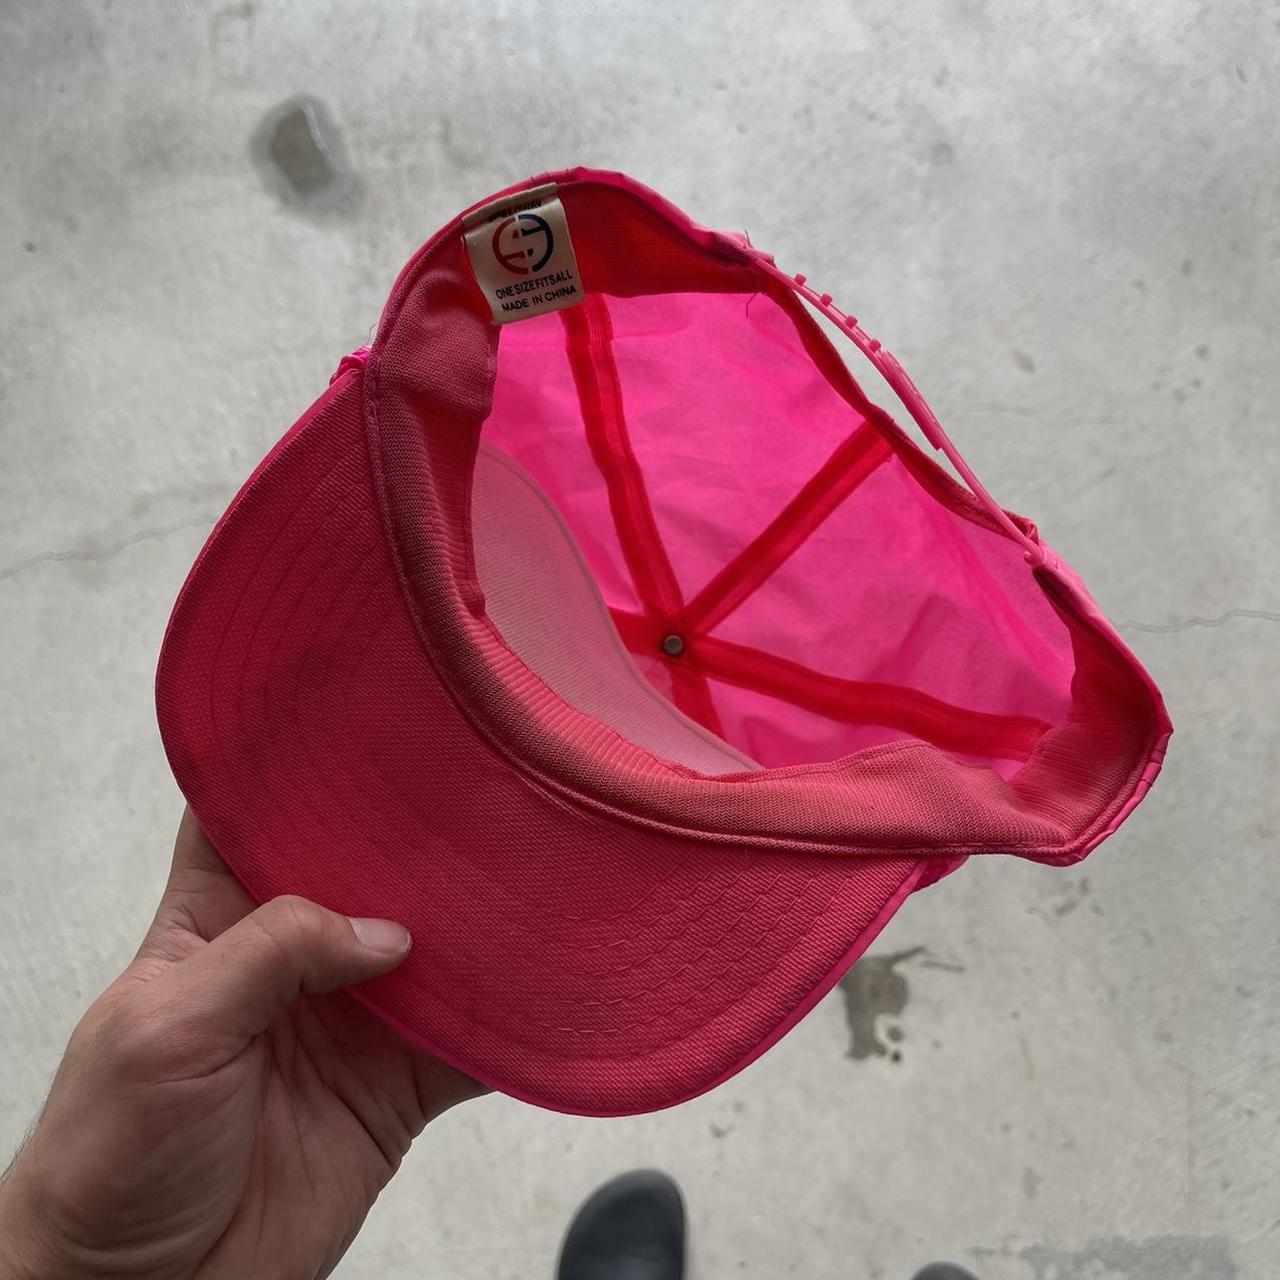 Reworked Carhartt Bucket Hat One Size Fits Most - Depop